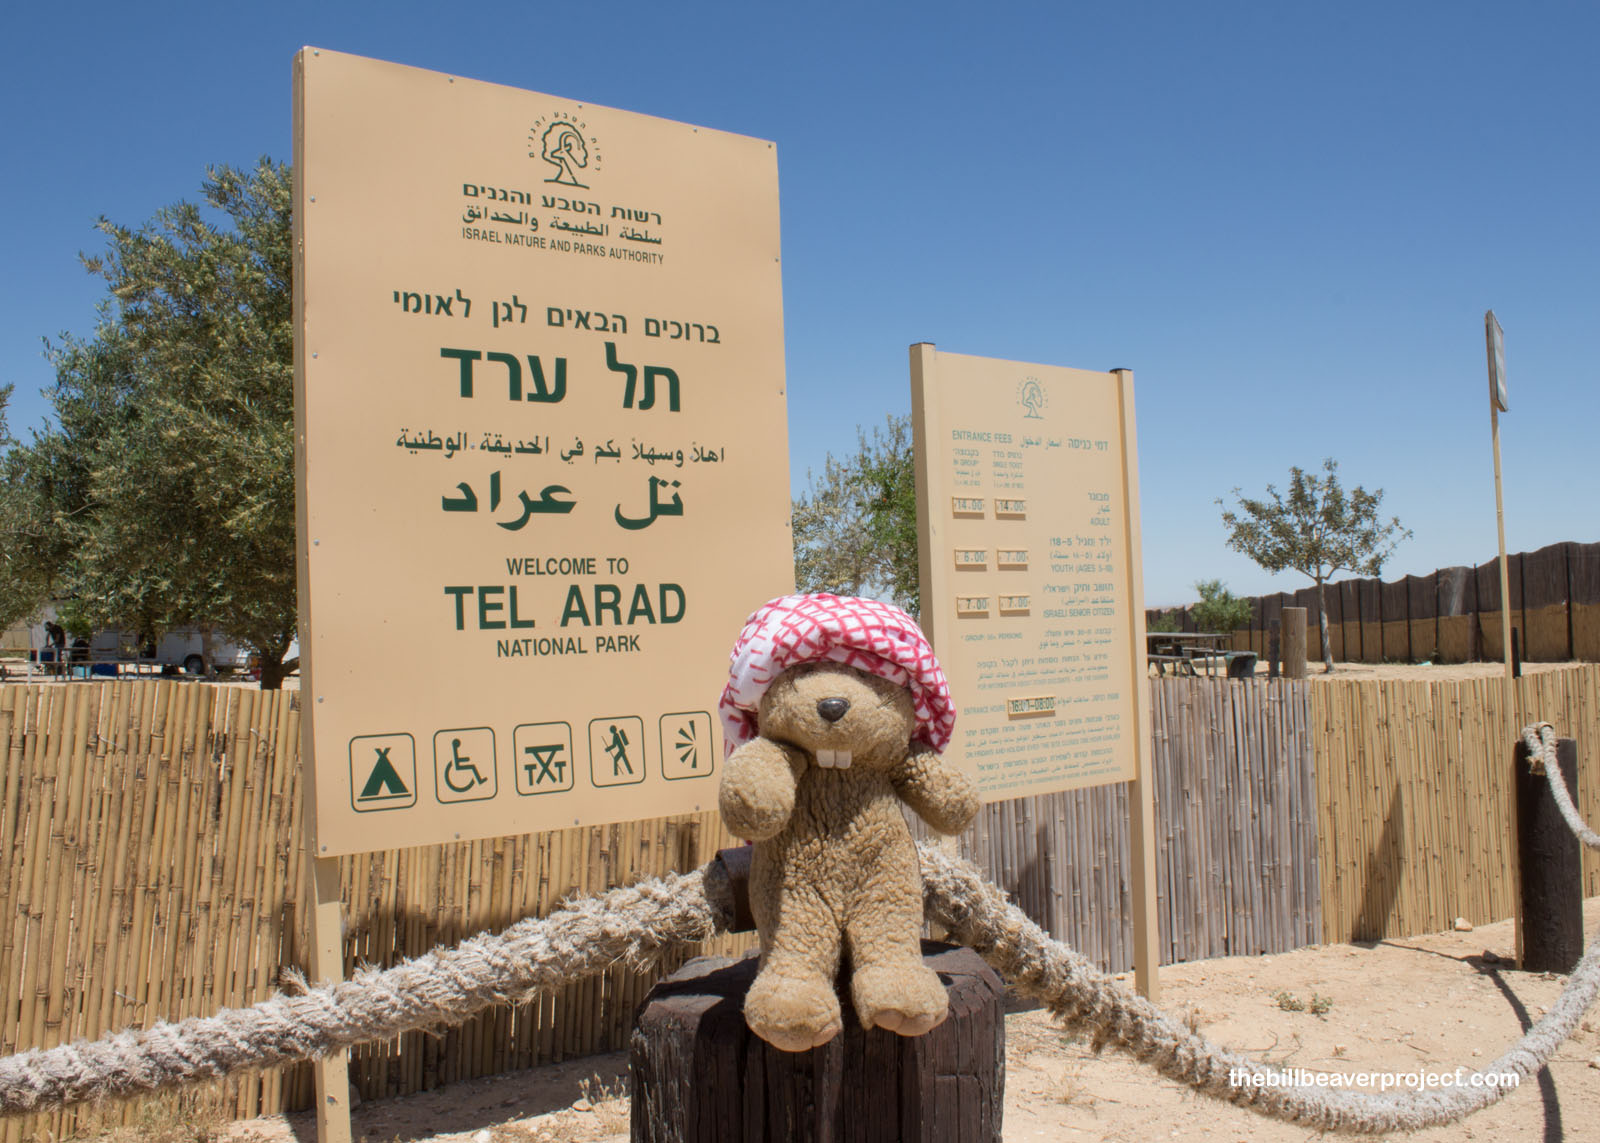 Tel Arad National Park